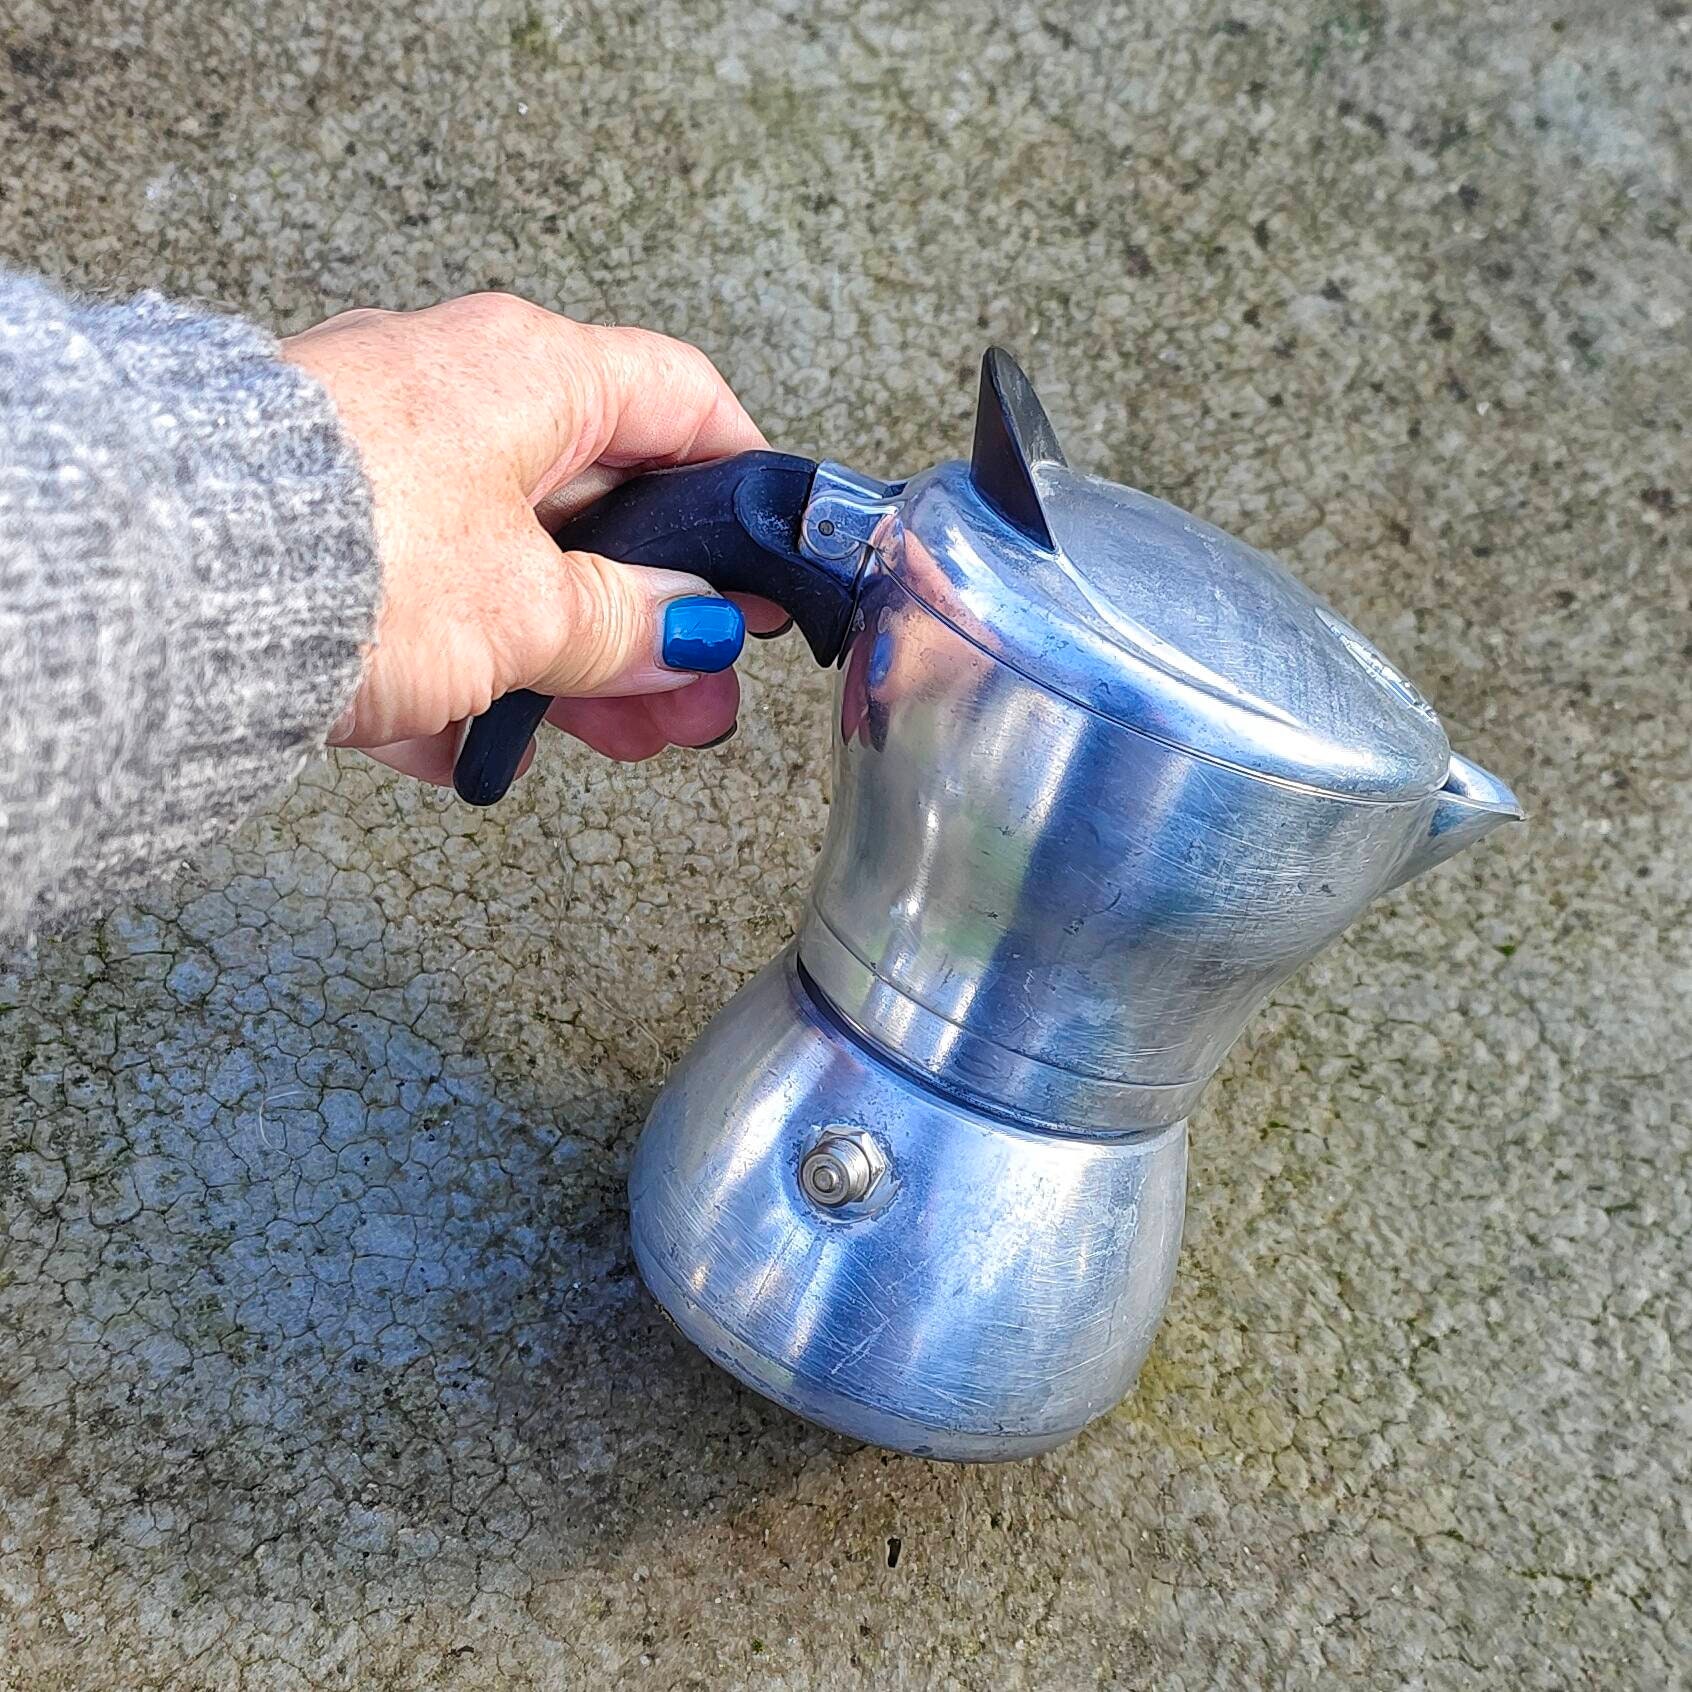 Vintage 90s Coffee Maker Bialetti Moka Express for 6 Cups Aluminium Moka Pot  